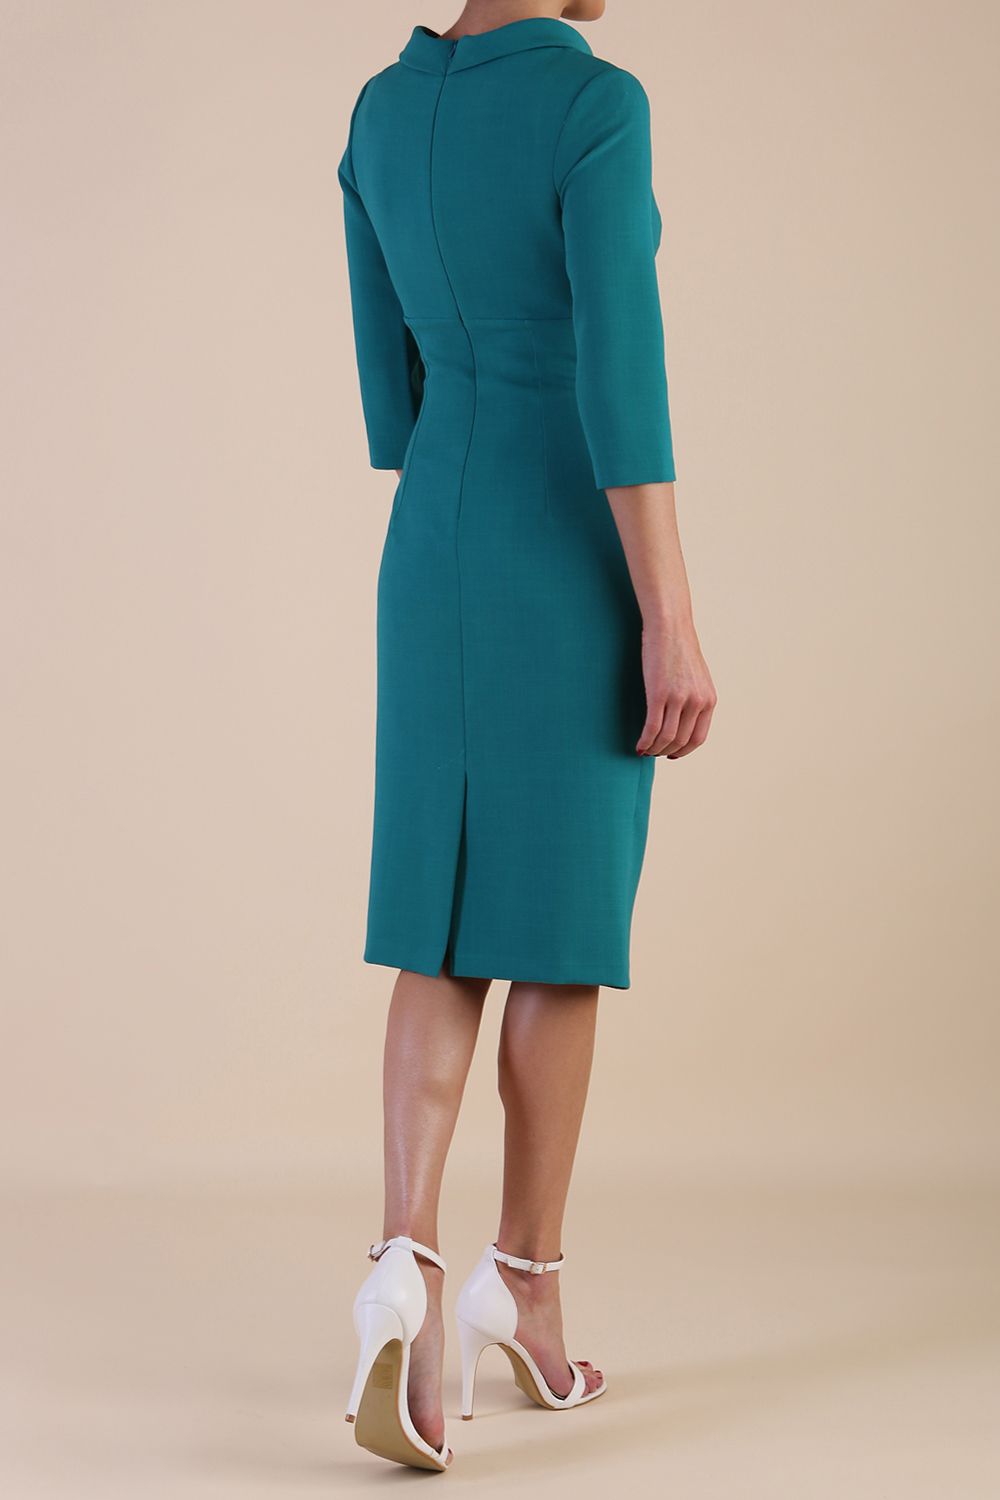 Model wearing diva catwalk Juliette 3/4 Sleeve Knee Length dress in Parasailing Green back